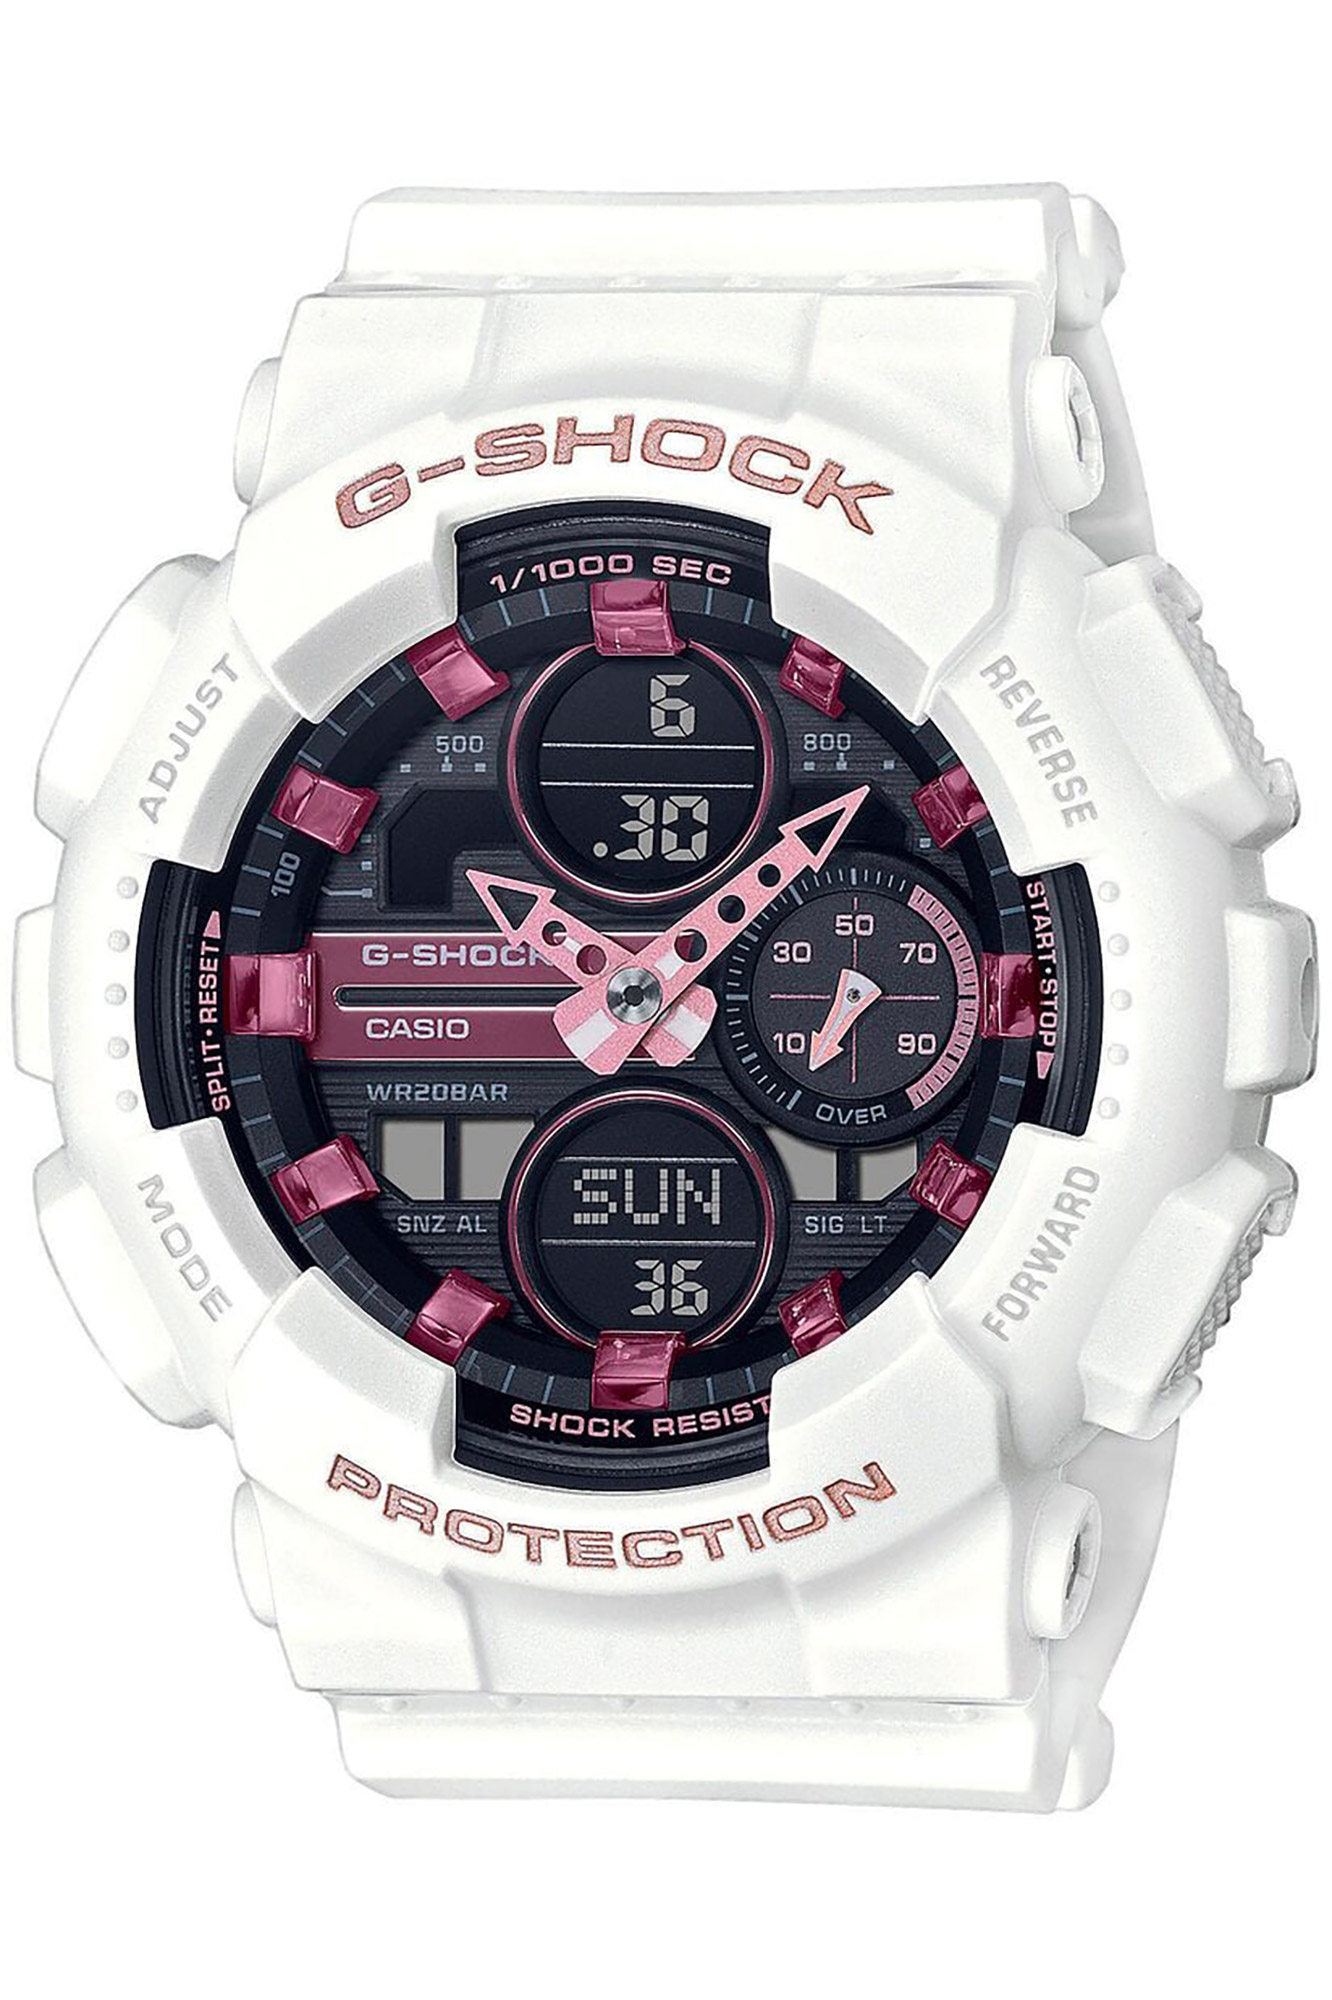 Reloj CASIO G-Shock gma-s140m-7aer